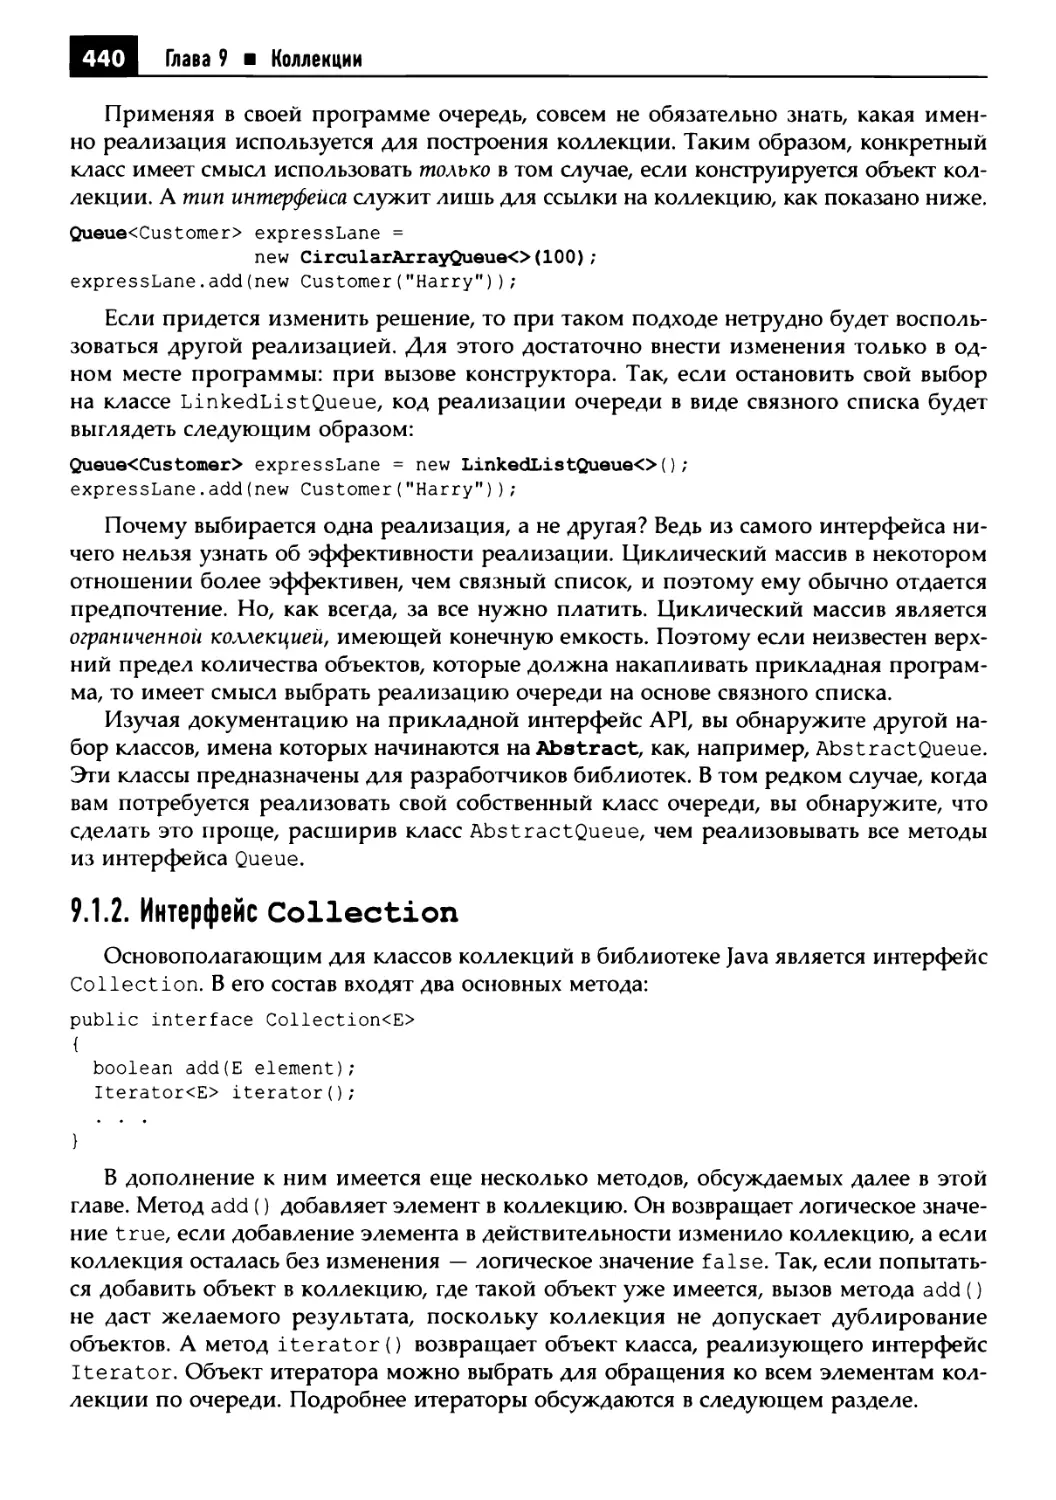 9.1.2. Интерфейс Collection